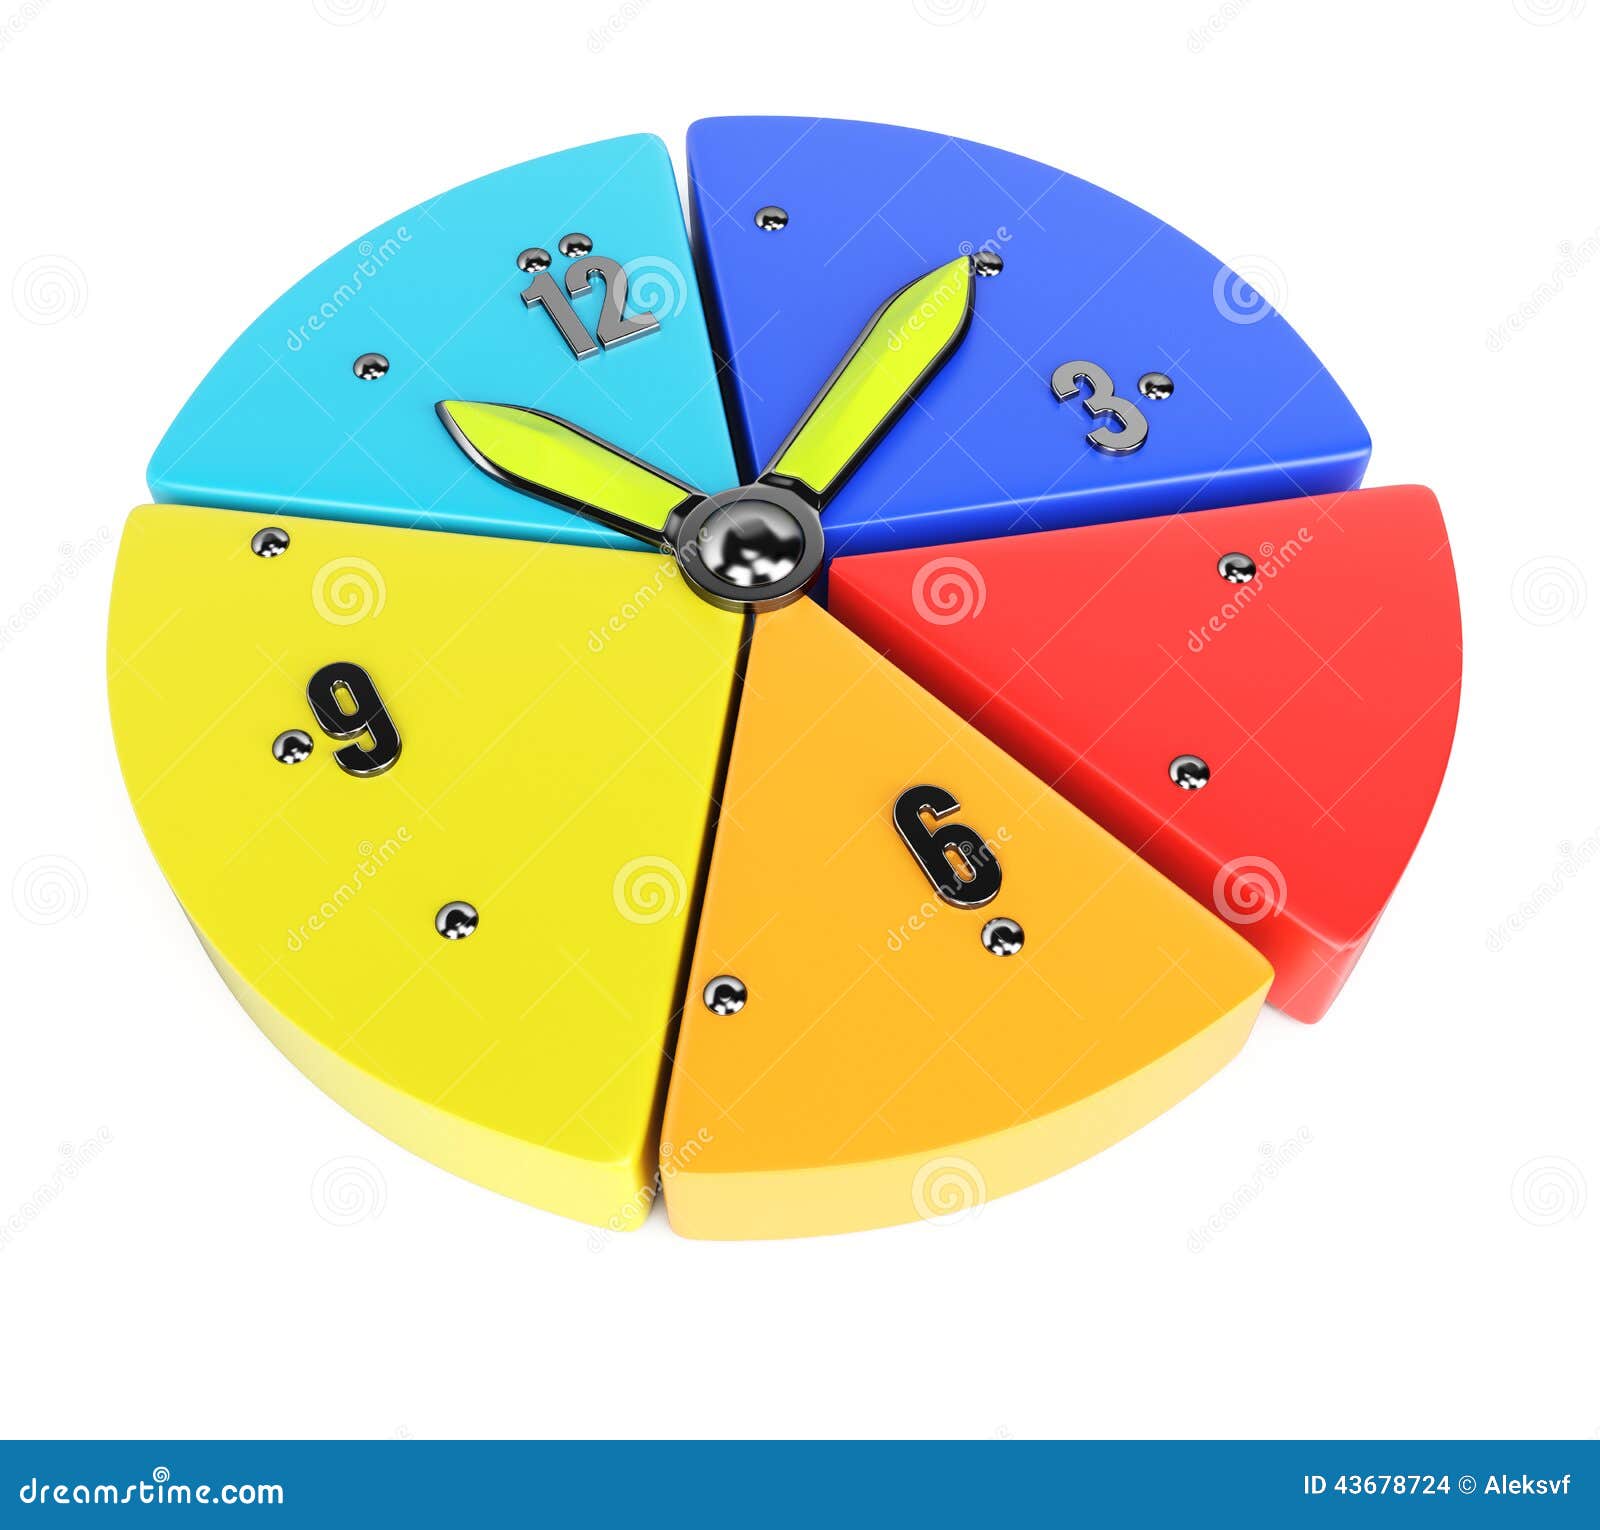 pie-chart-with-clock-handles-stock-illustration-illustration-of